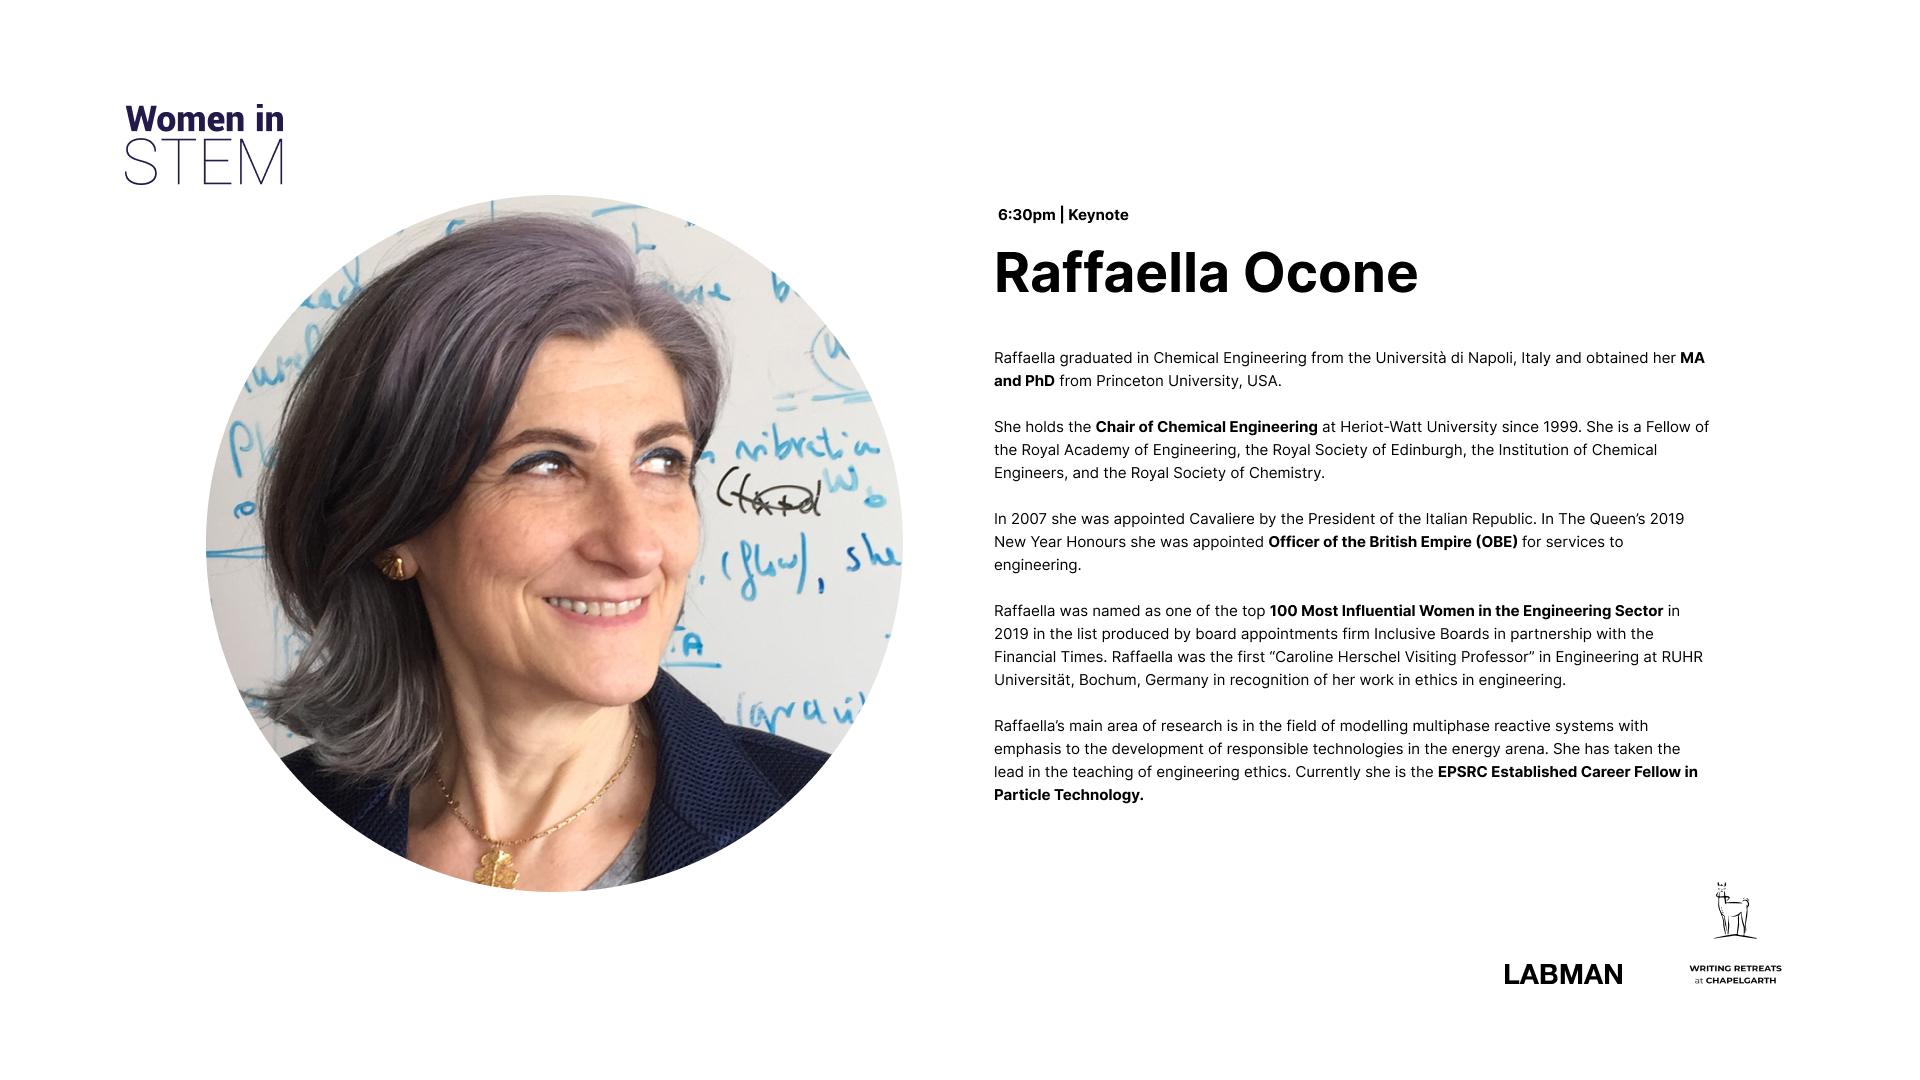 Raffaella Ocone will be speaking at Labman's Science Cabaret